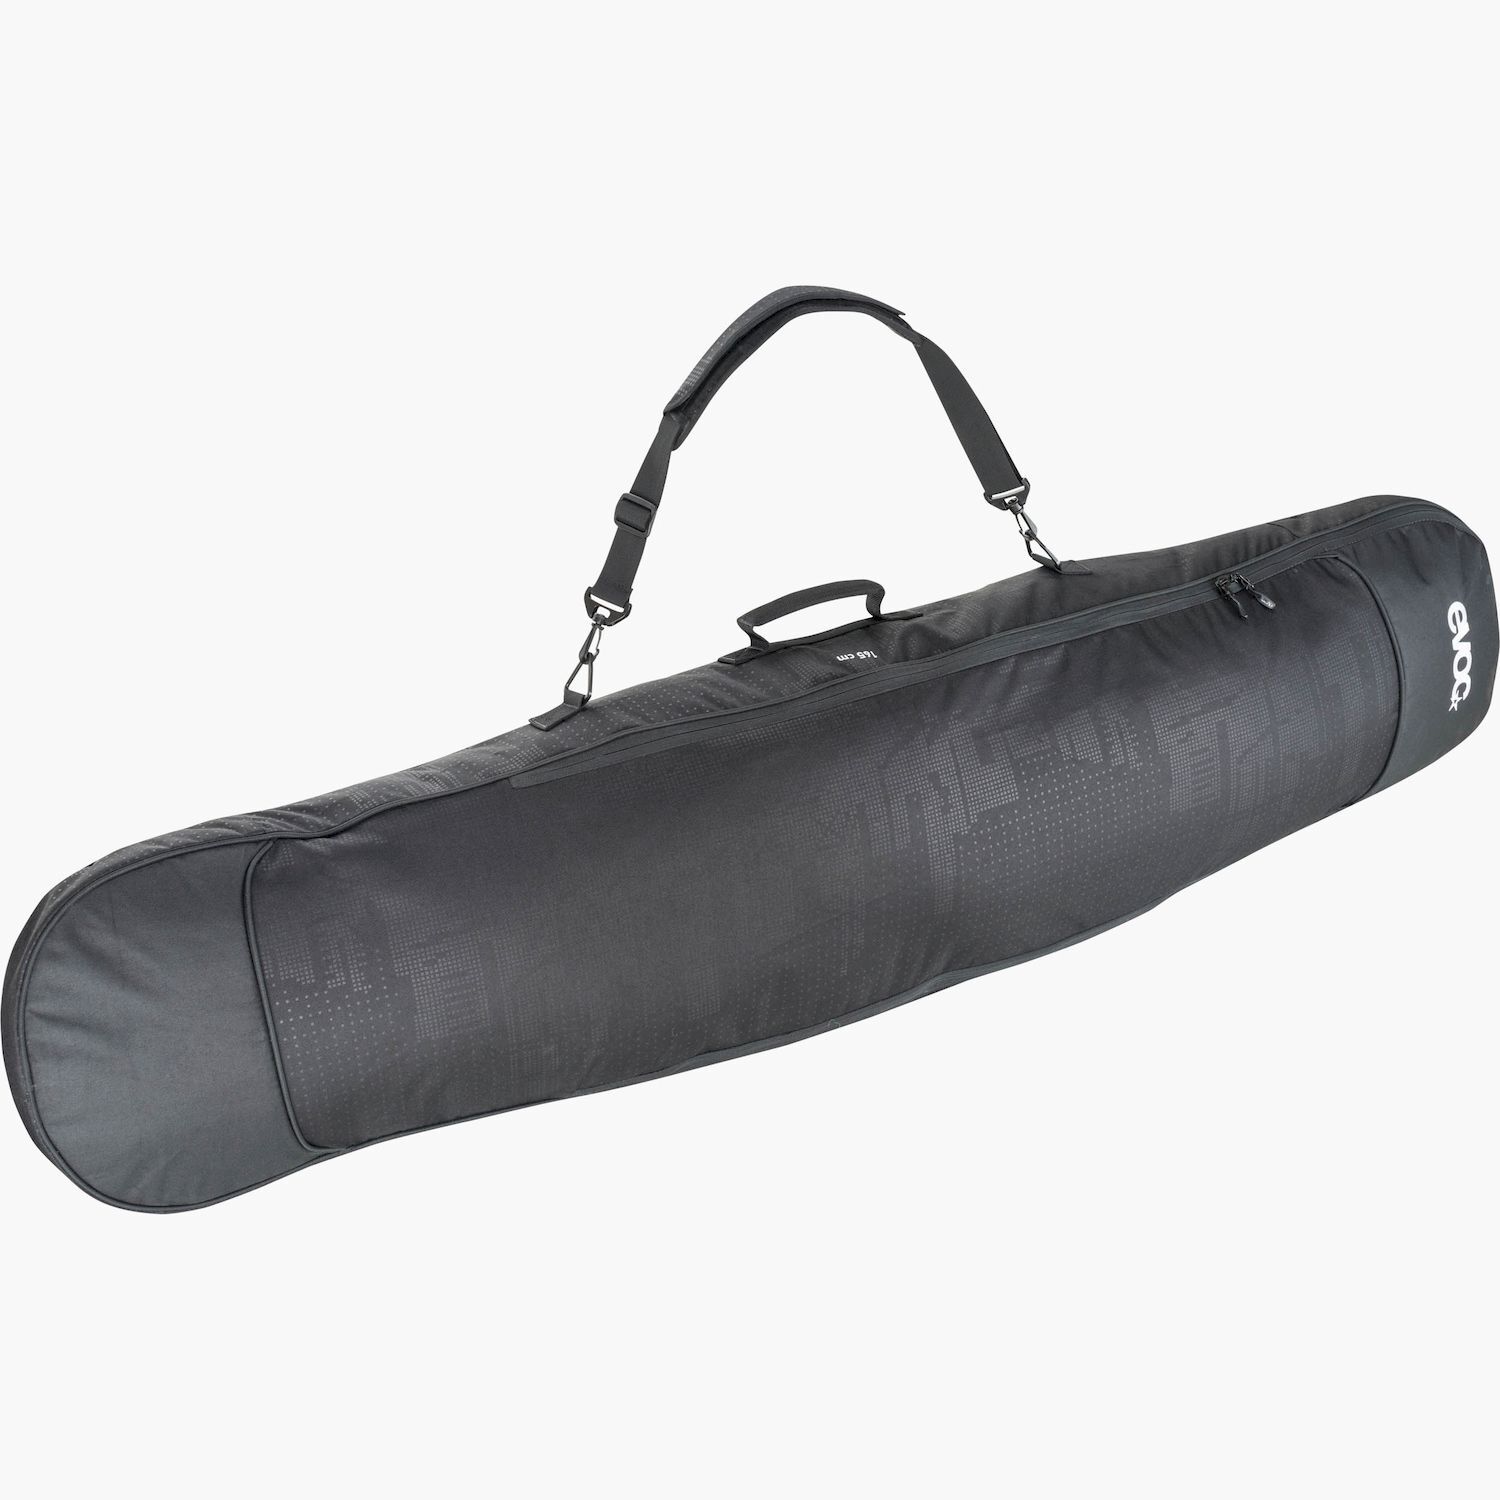 Evoc Board Bag - Snowboard bag